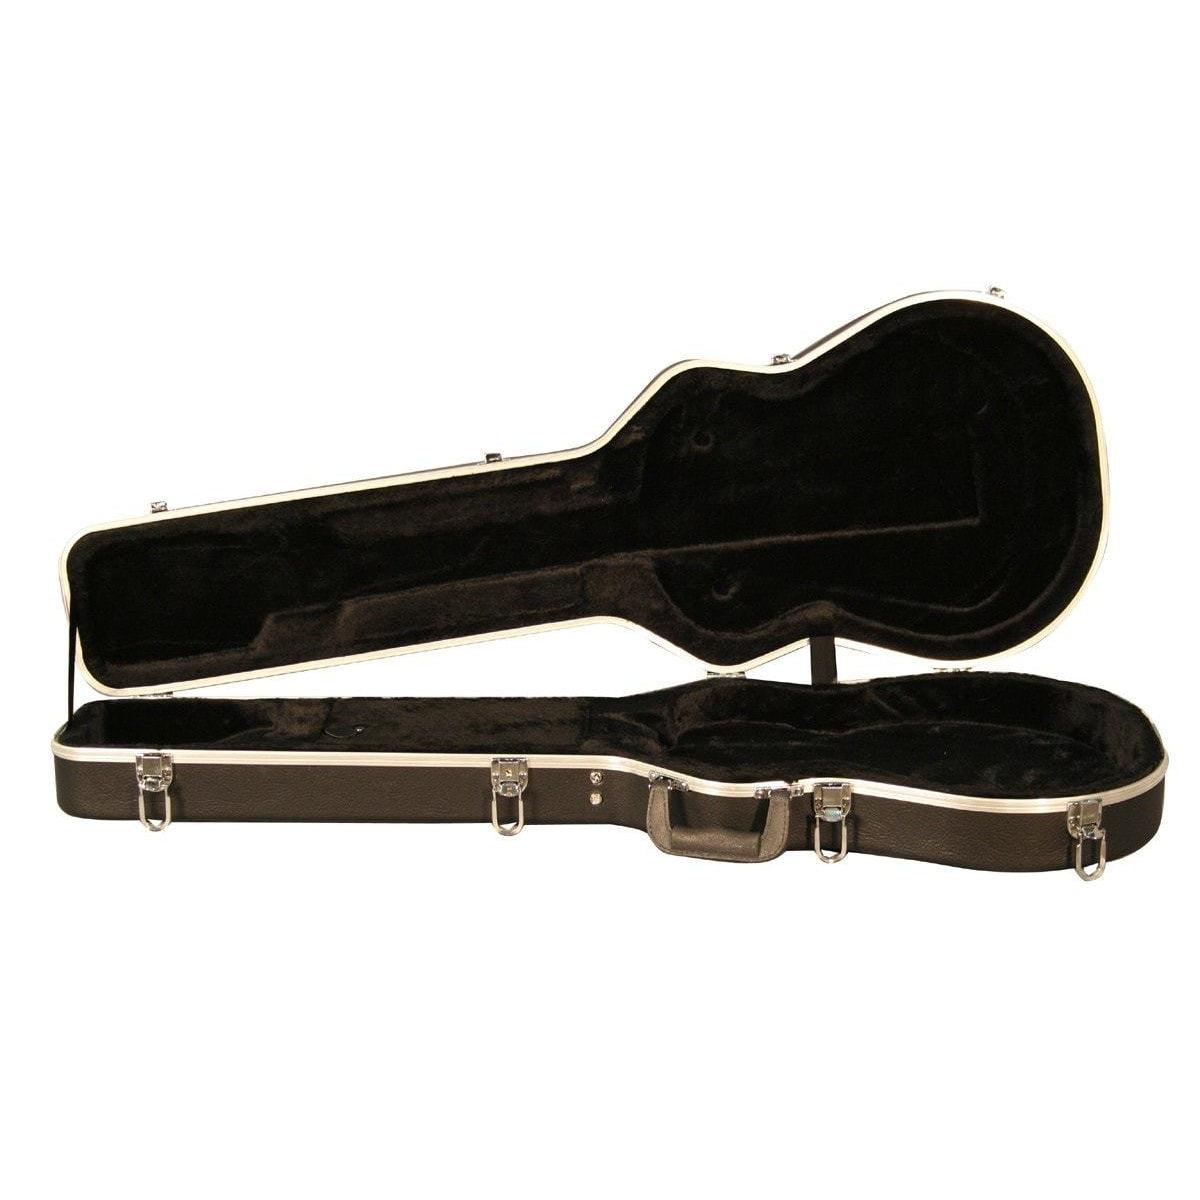 Gator GC-LPS Gibson Les Paul Guitar Case